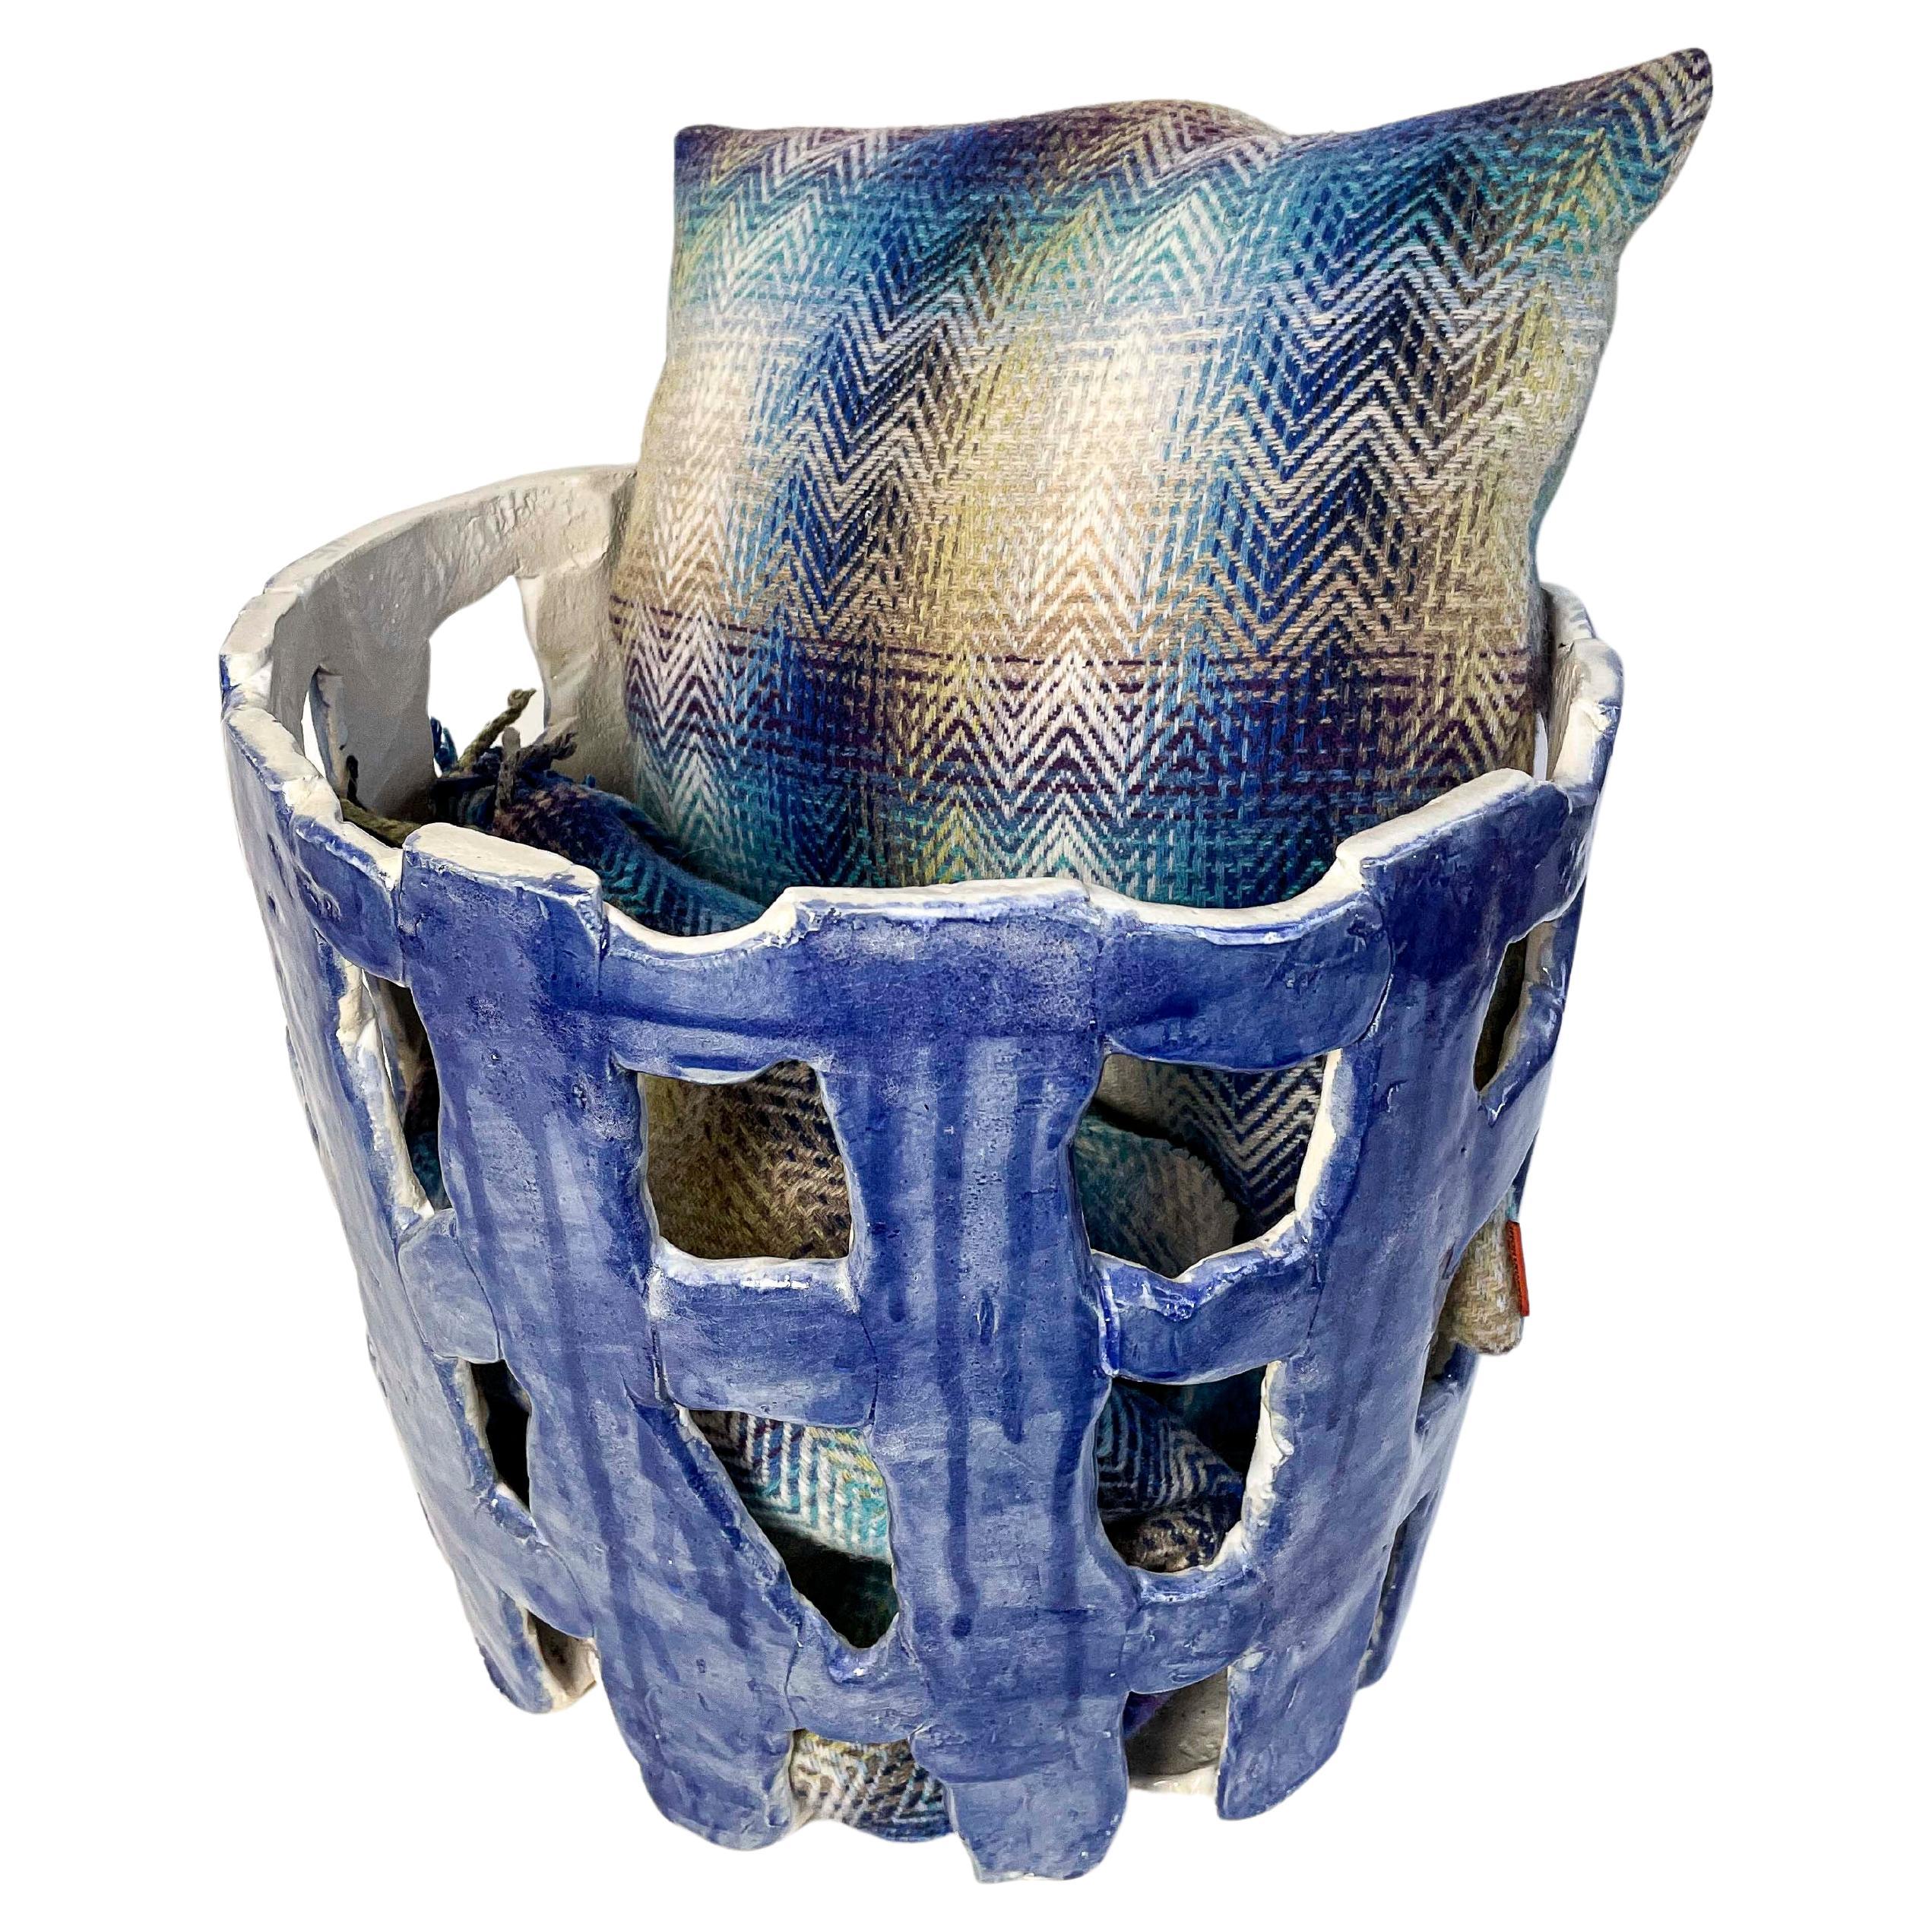 Unique CortoMagDelft ceramic basket For Sale